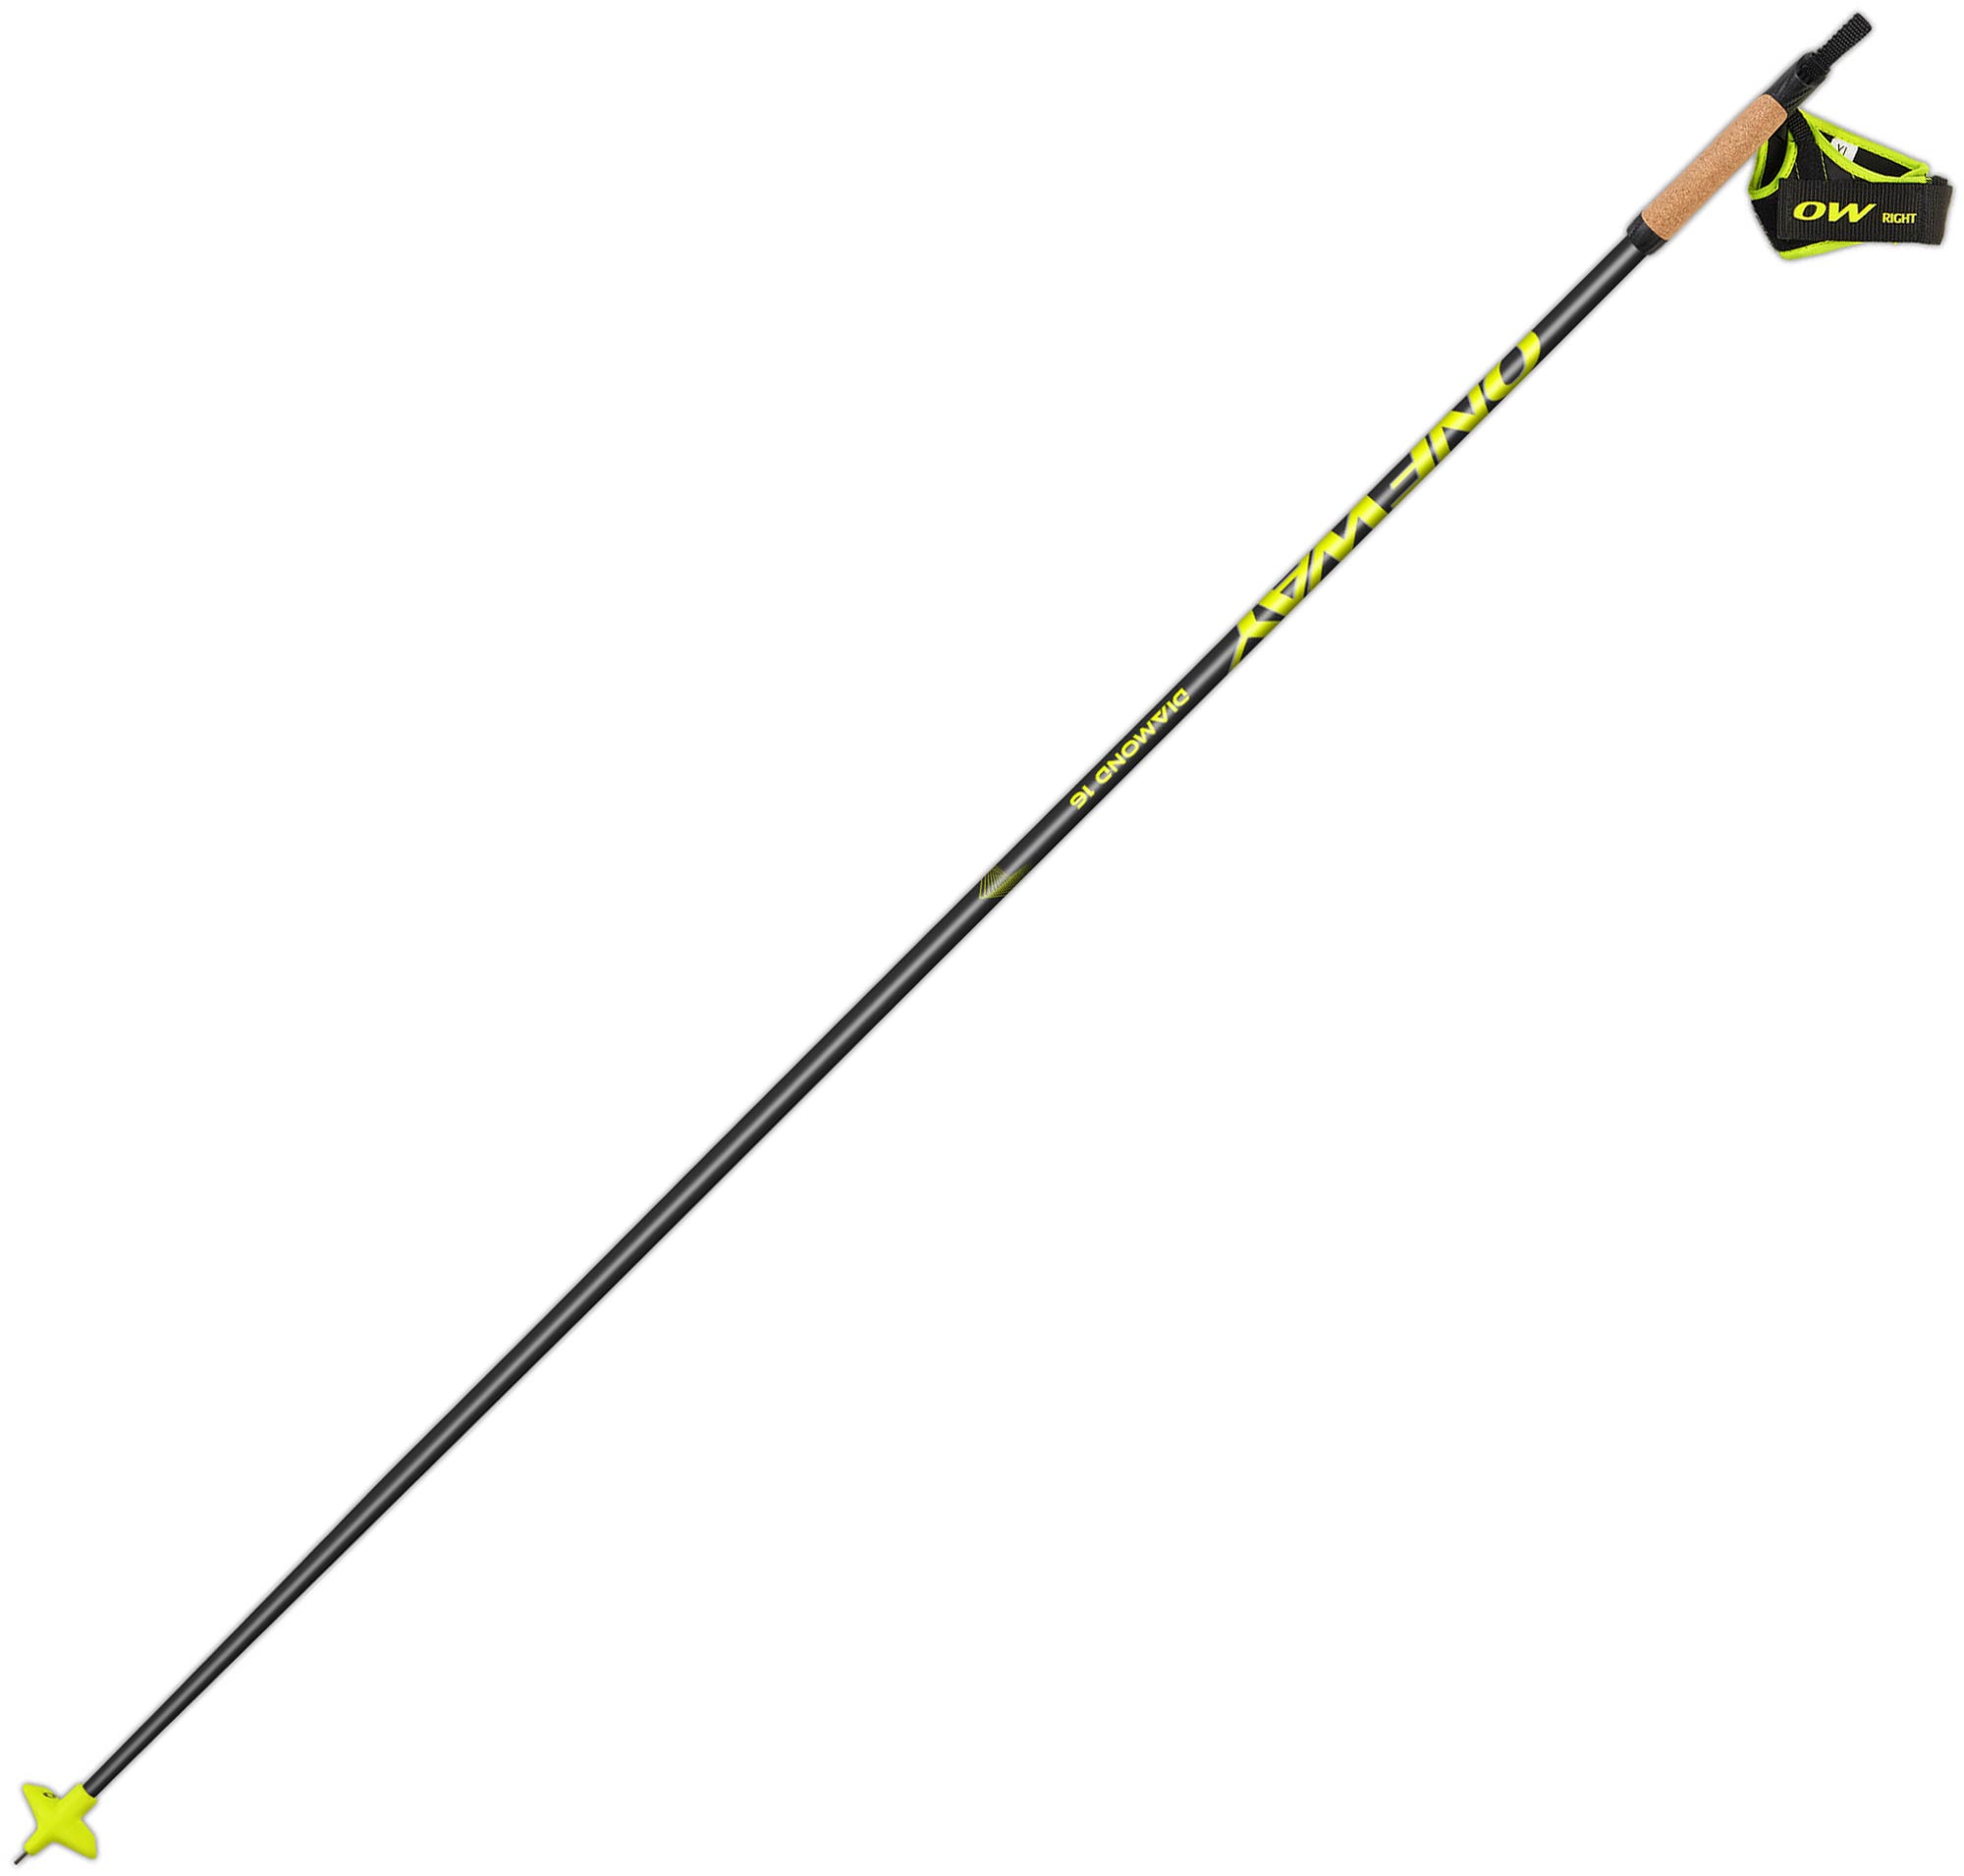 Nordic ski poles